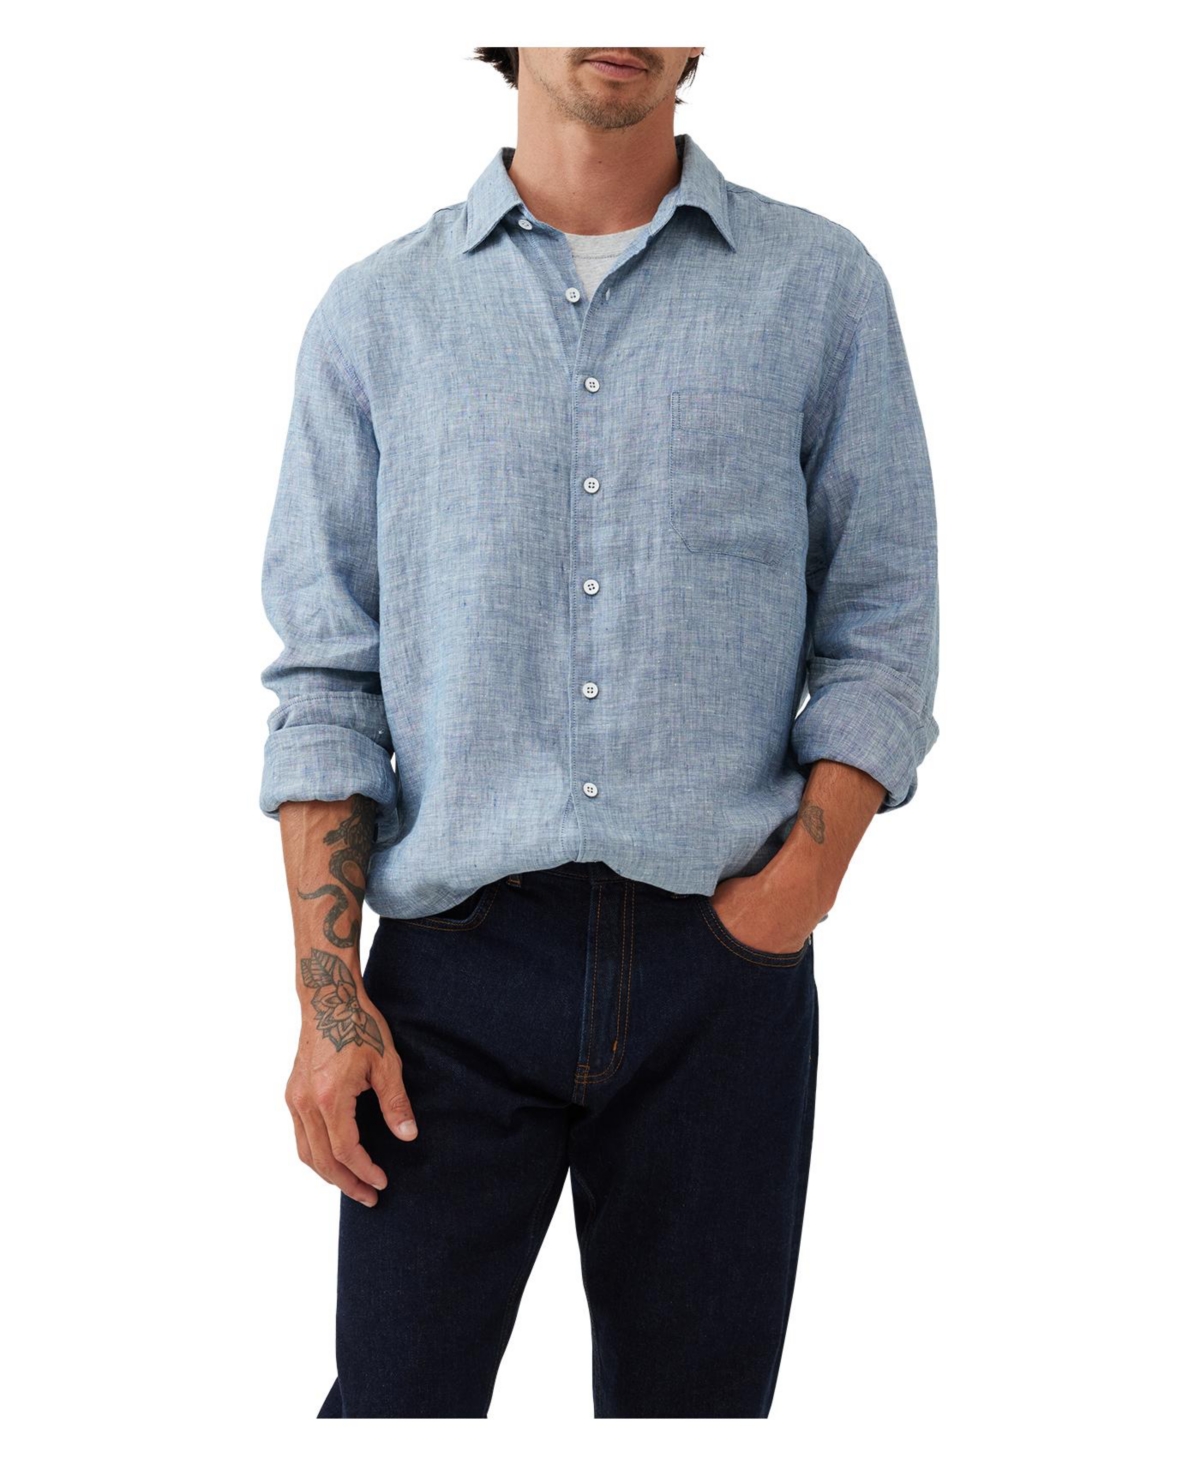 Men's Chaffeys Sports Fit Shirt - Denim blue